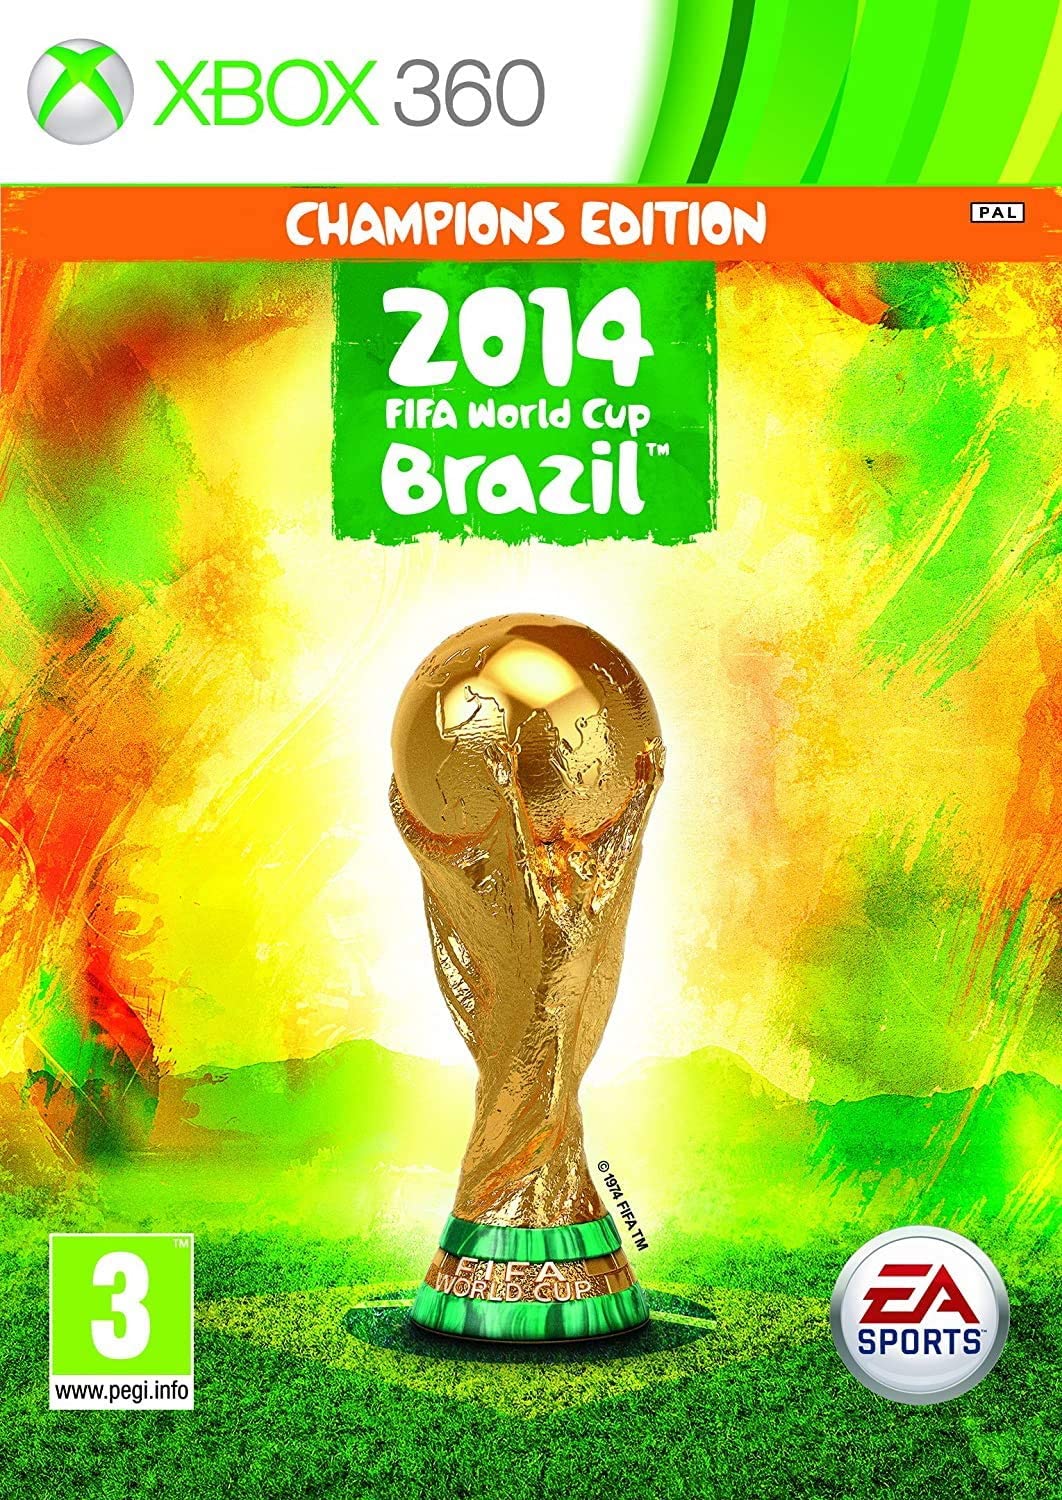 2014 Fifa World Cup Brazil: Champions Edition